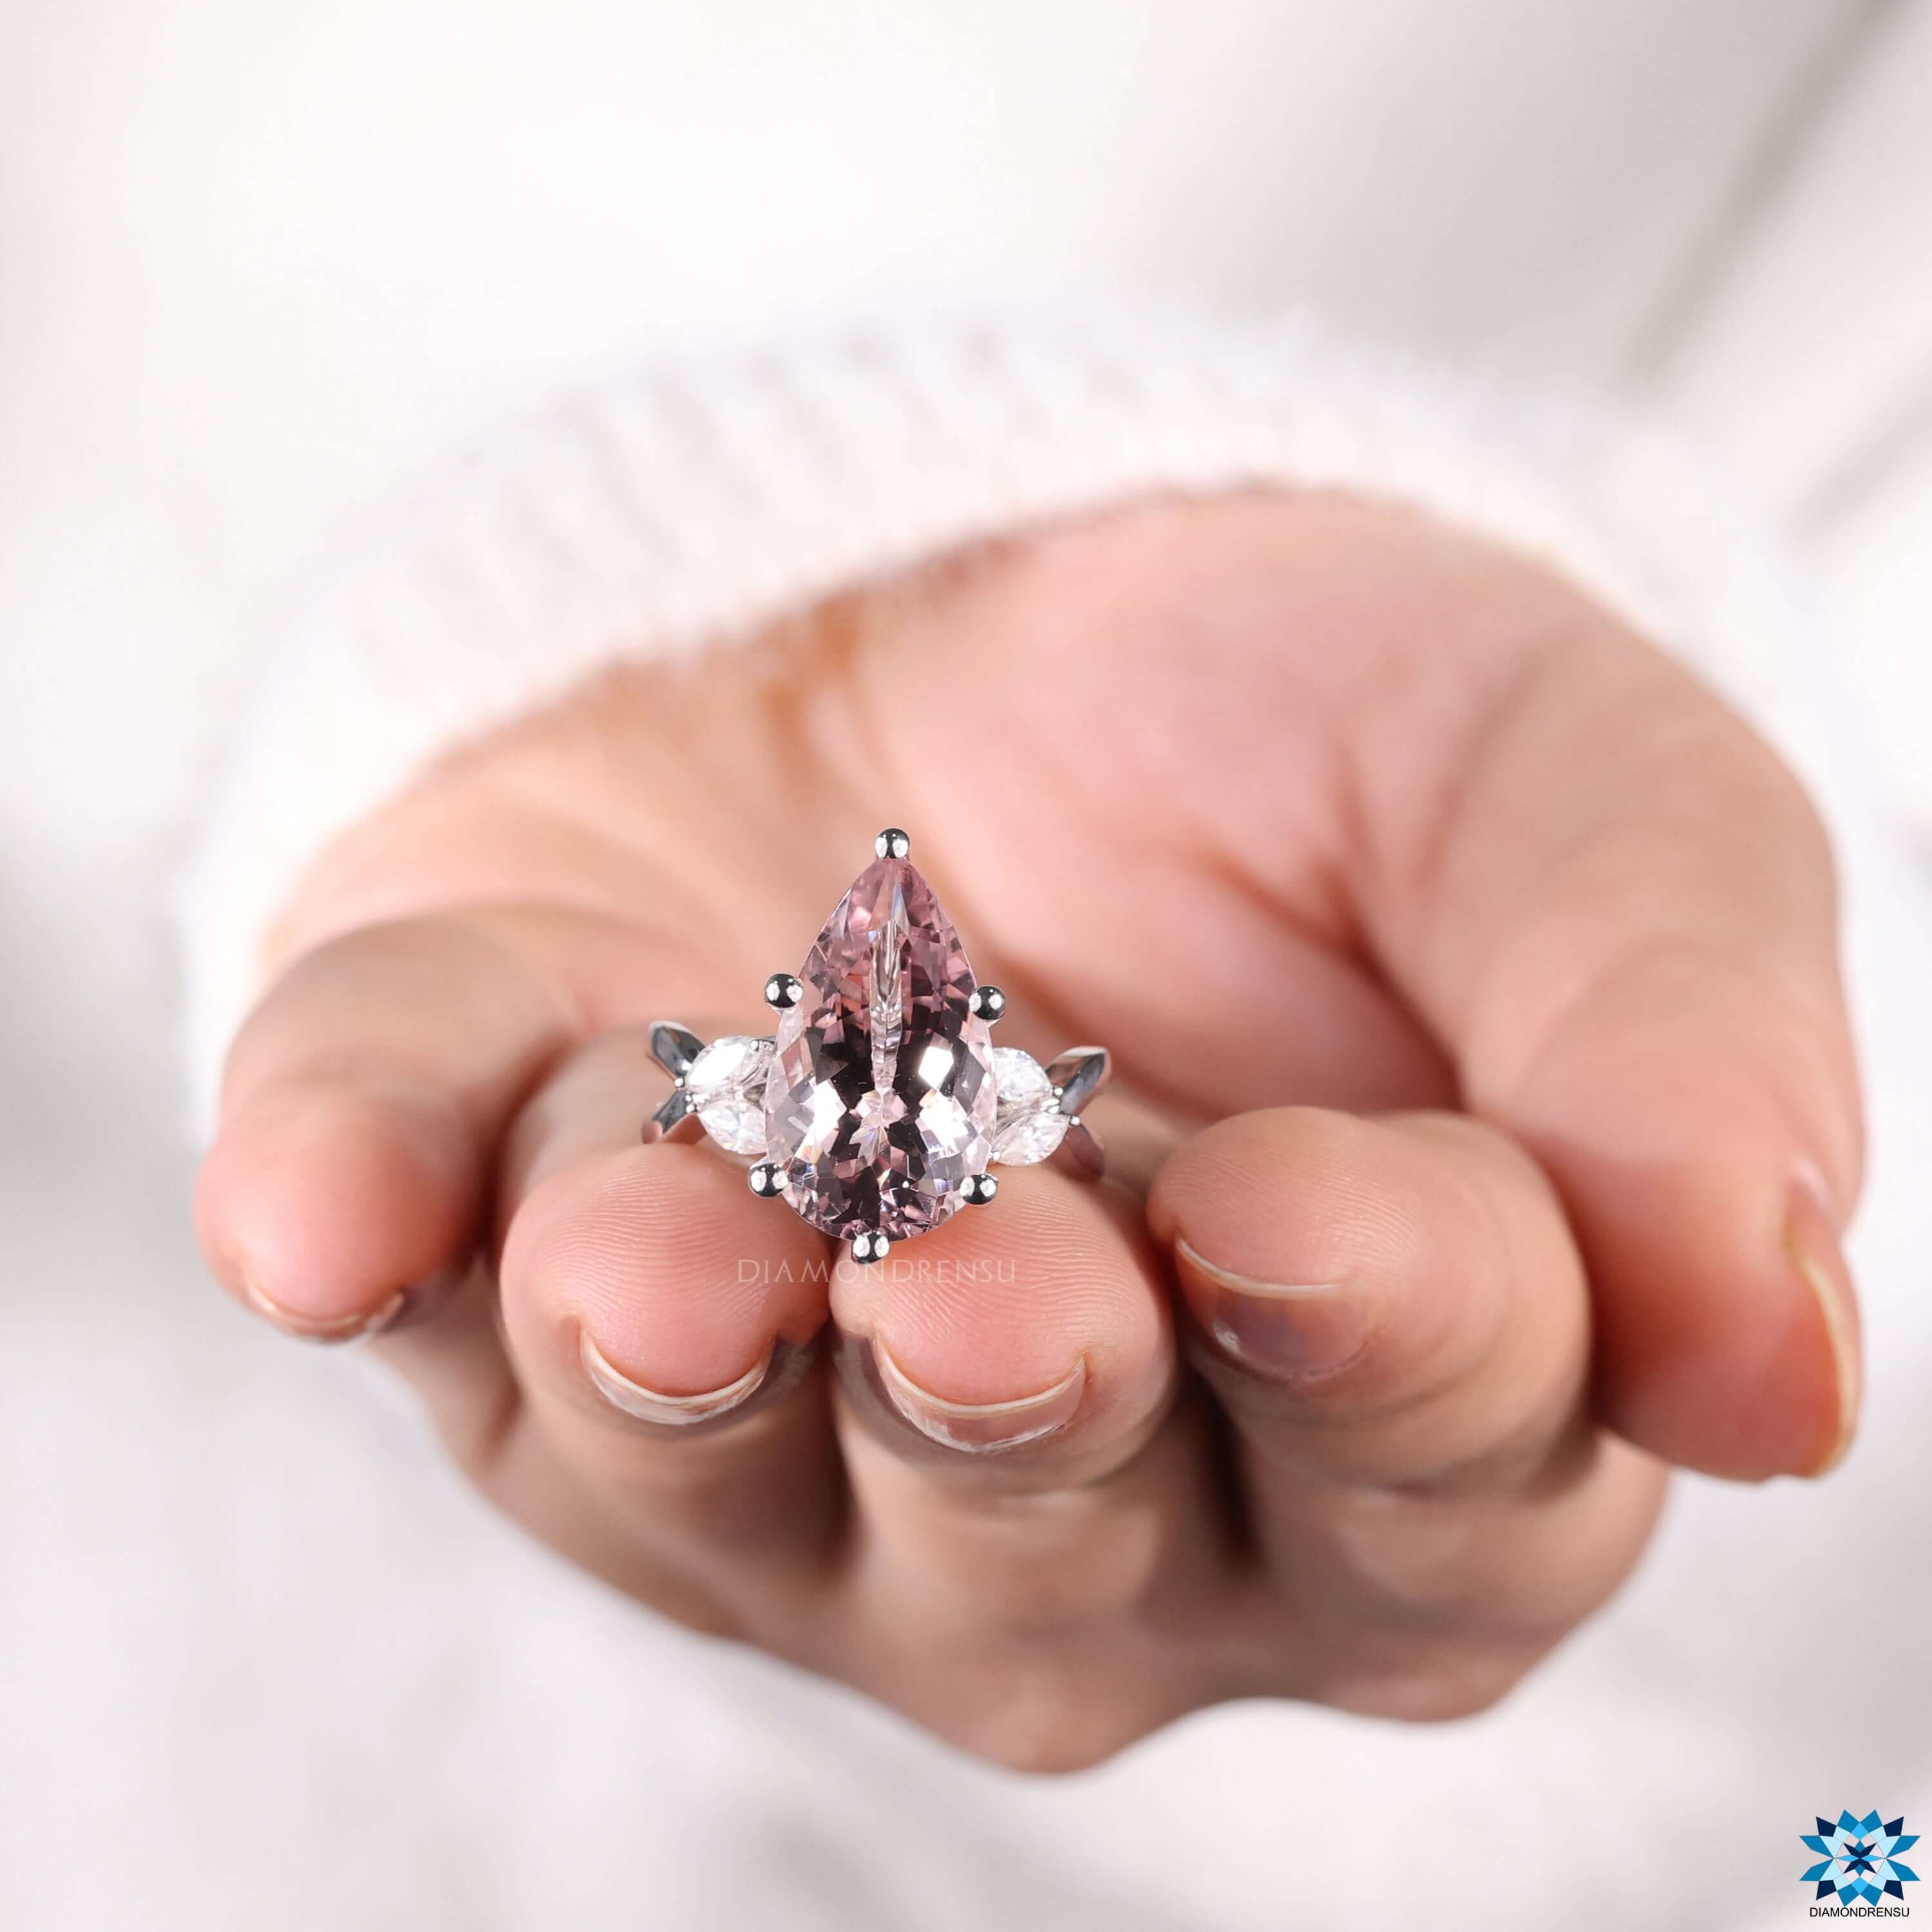 morganite engagement ring - diamondrensu